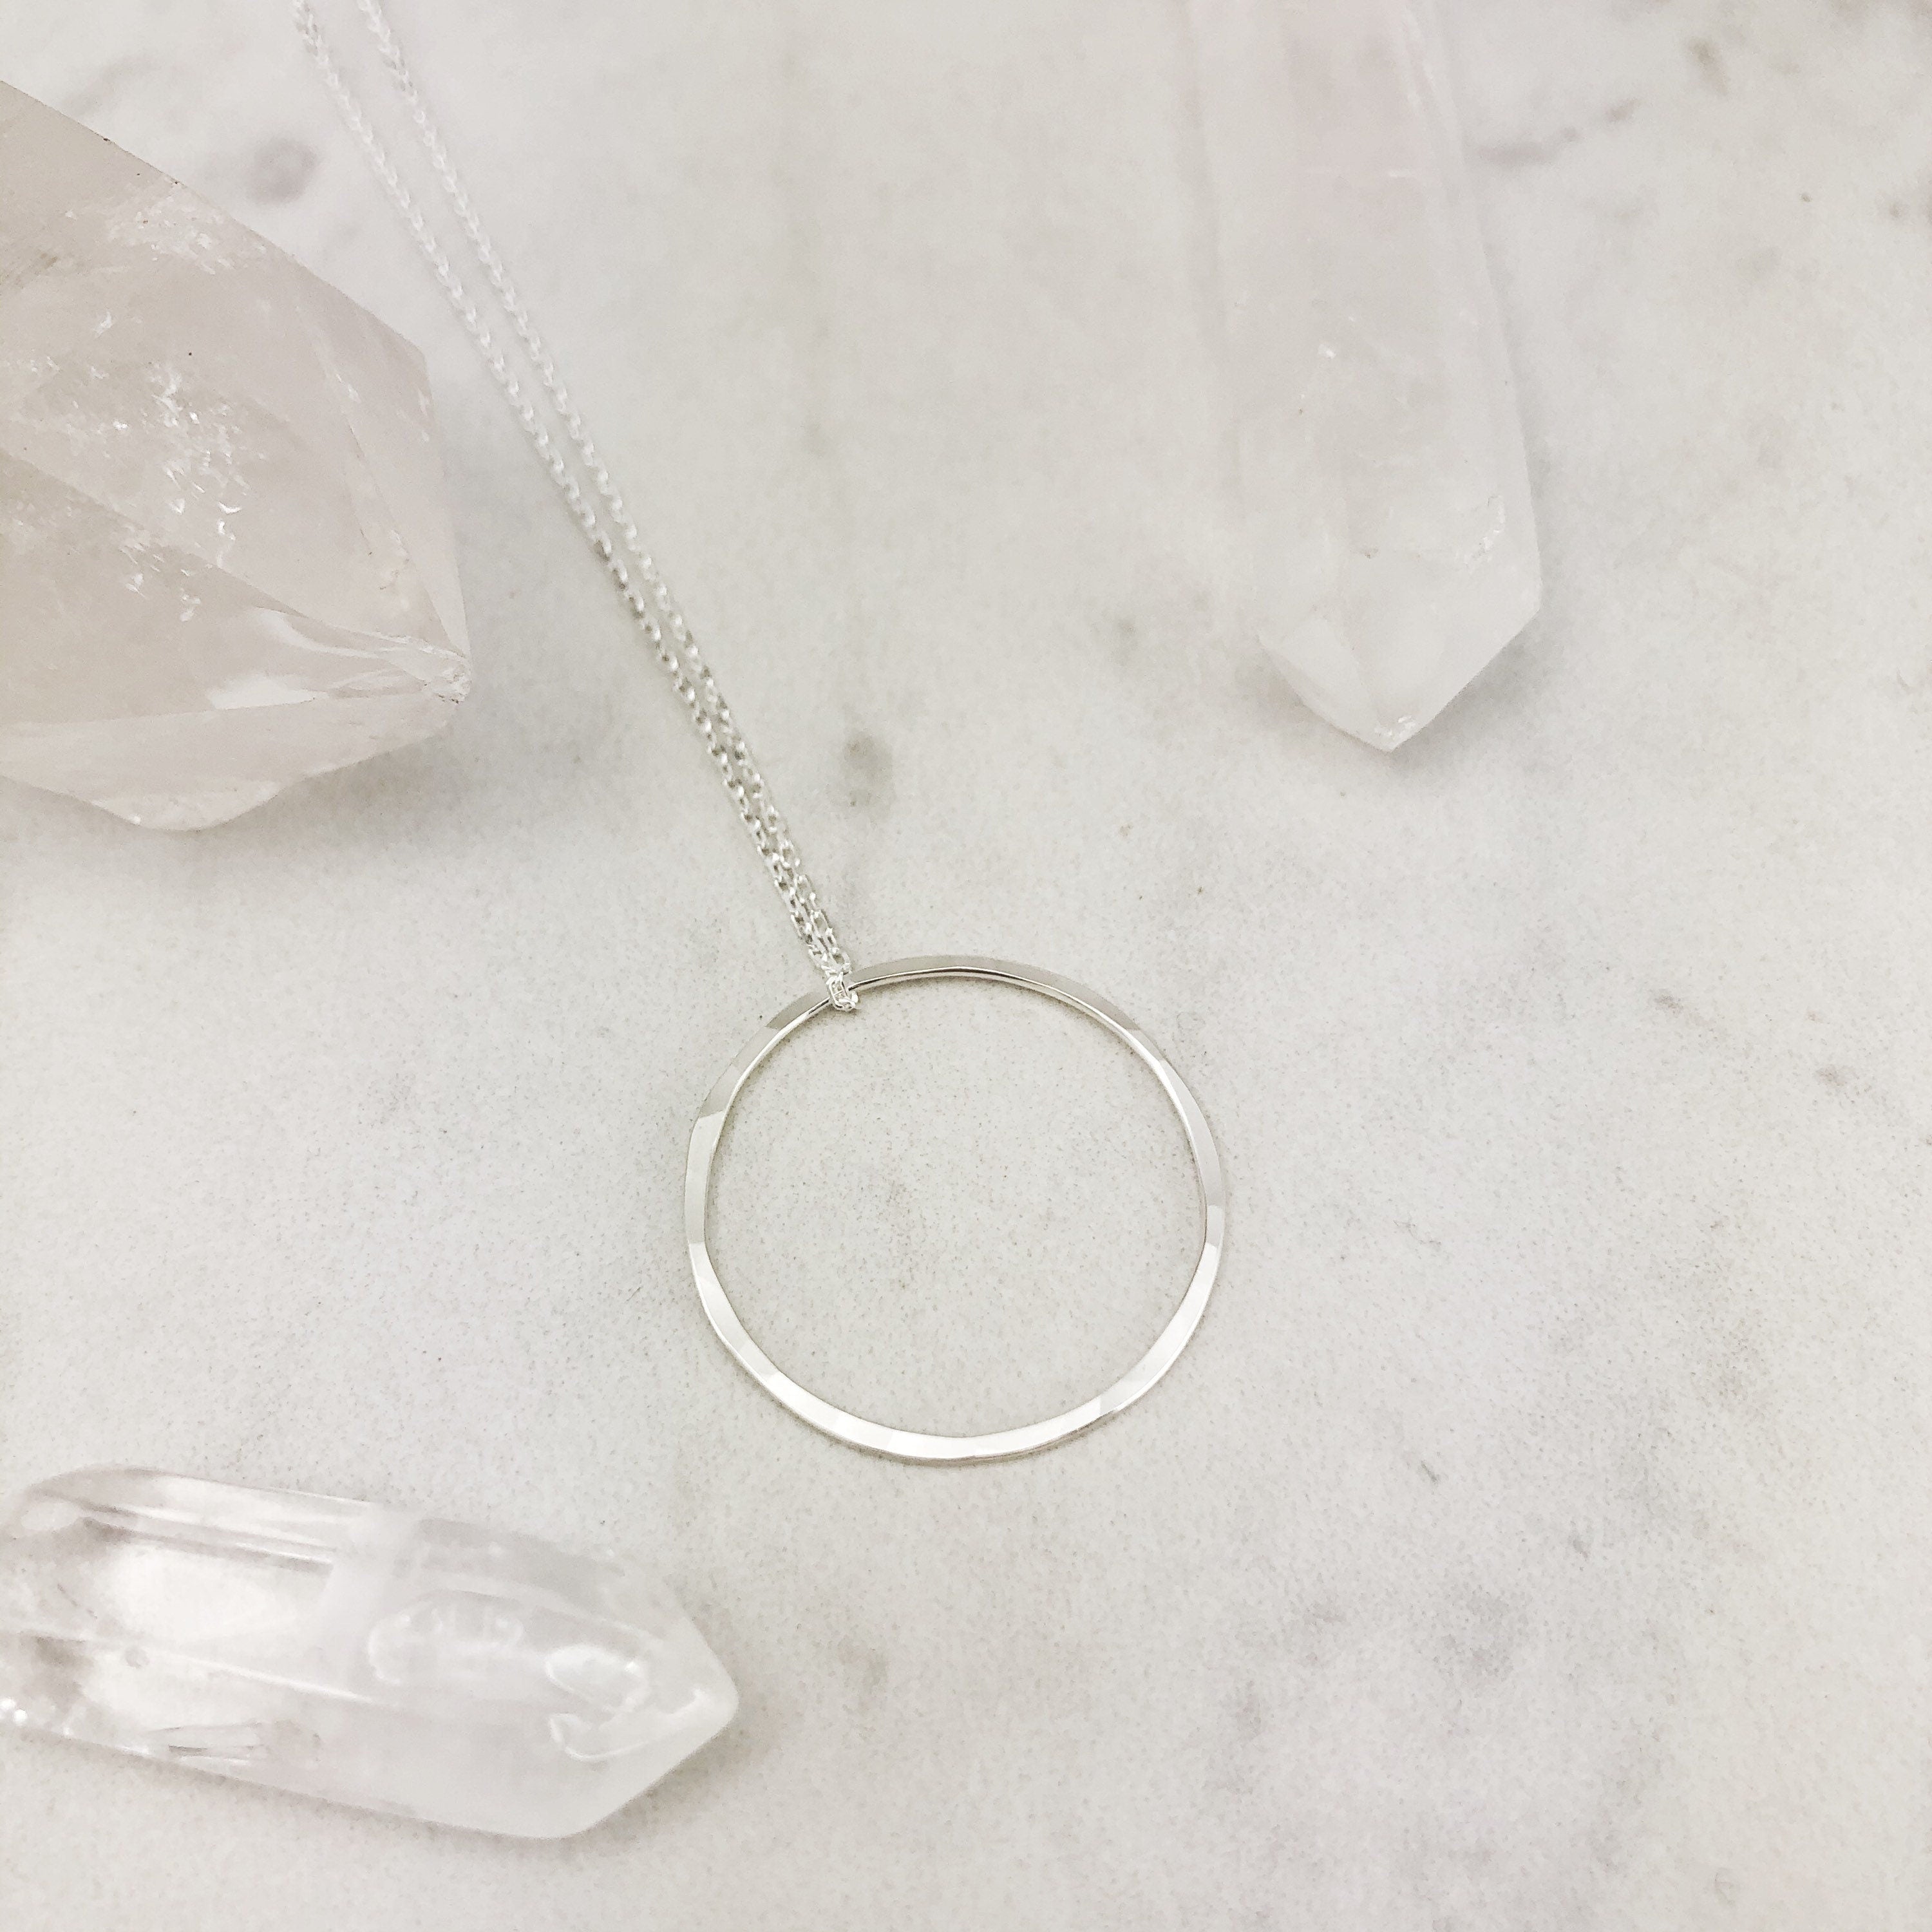 Large Sterling Silver Karma Necklace, hammered circle necklace, karma jewelry, silver circle pendant, open circle necklace, dainty necklace